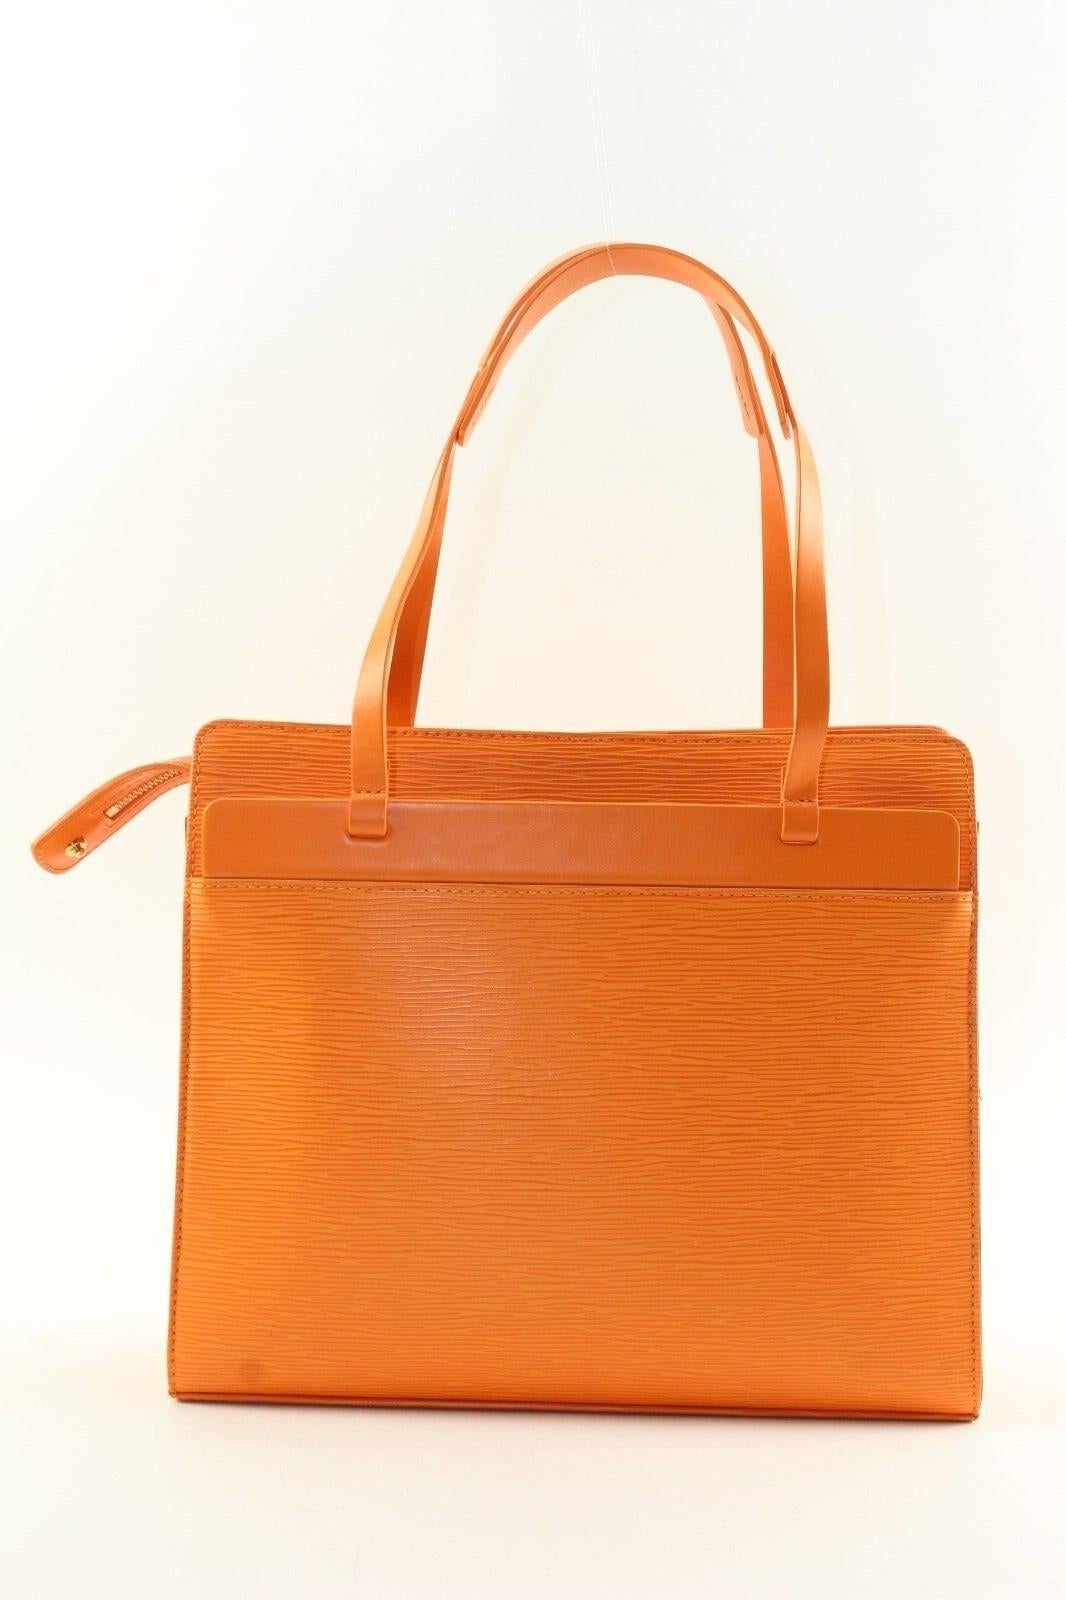 LOUIS VUITTON Orange Epi Leather Croisette Zip Shoulder Bag 1LV1220K
Date Code/Serial Number: CA0044

Made In: Spain

Measurements: Length:  12.5